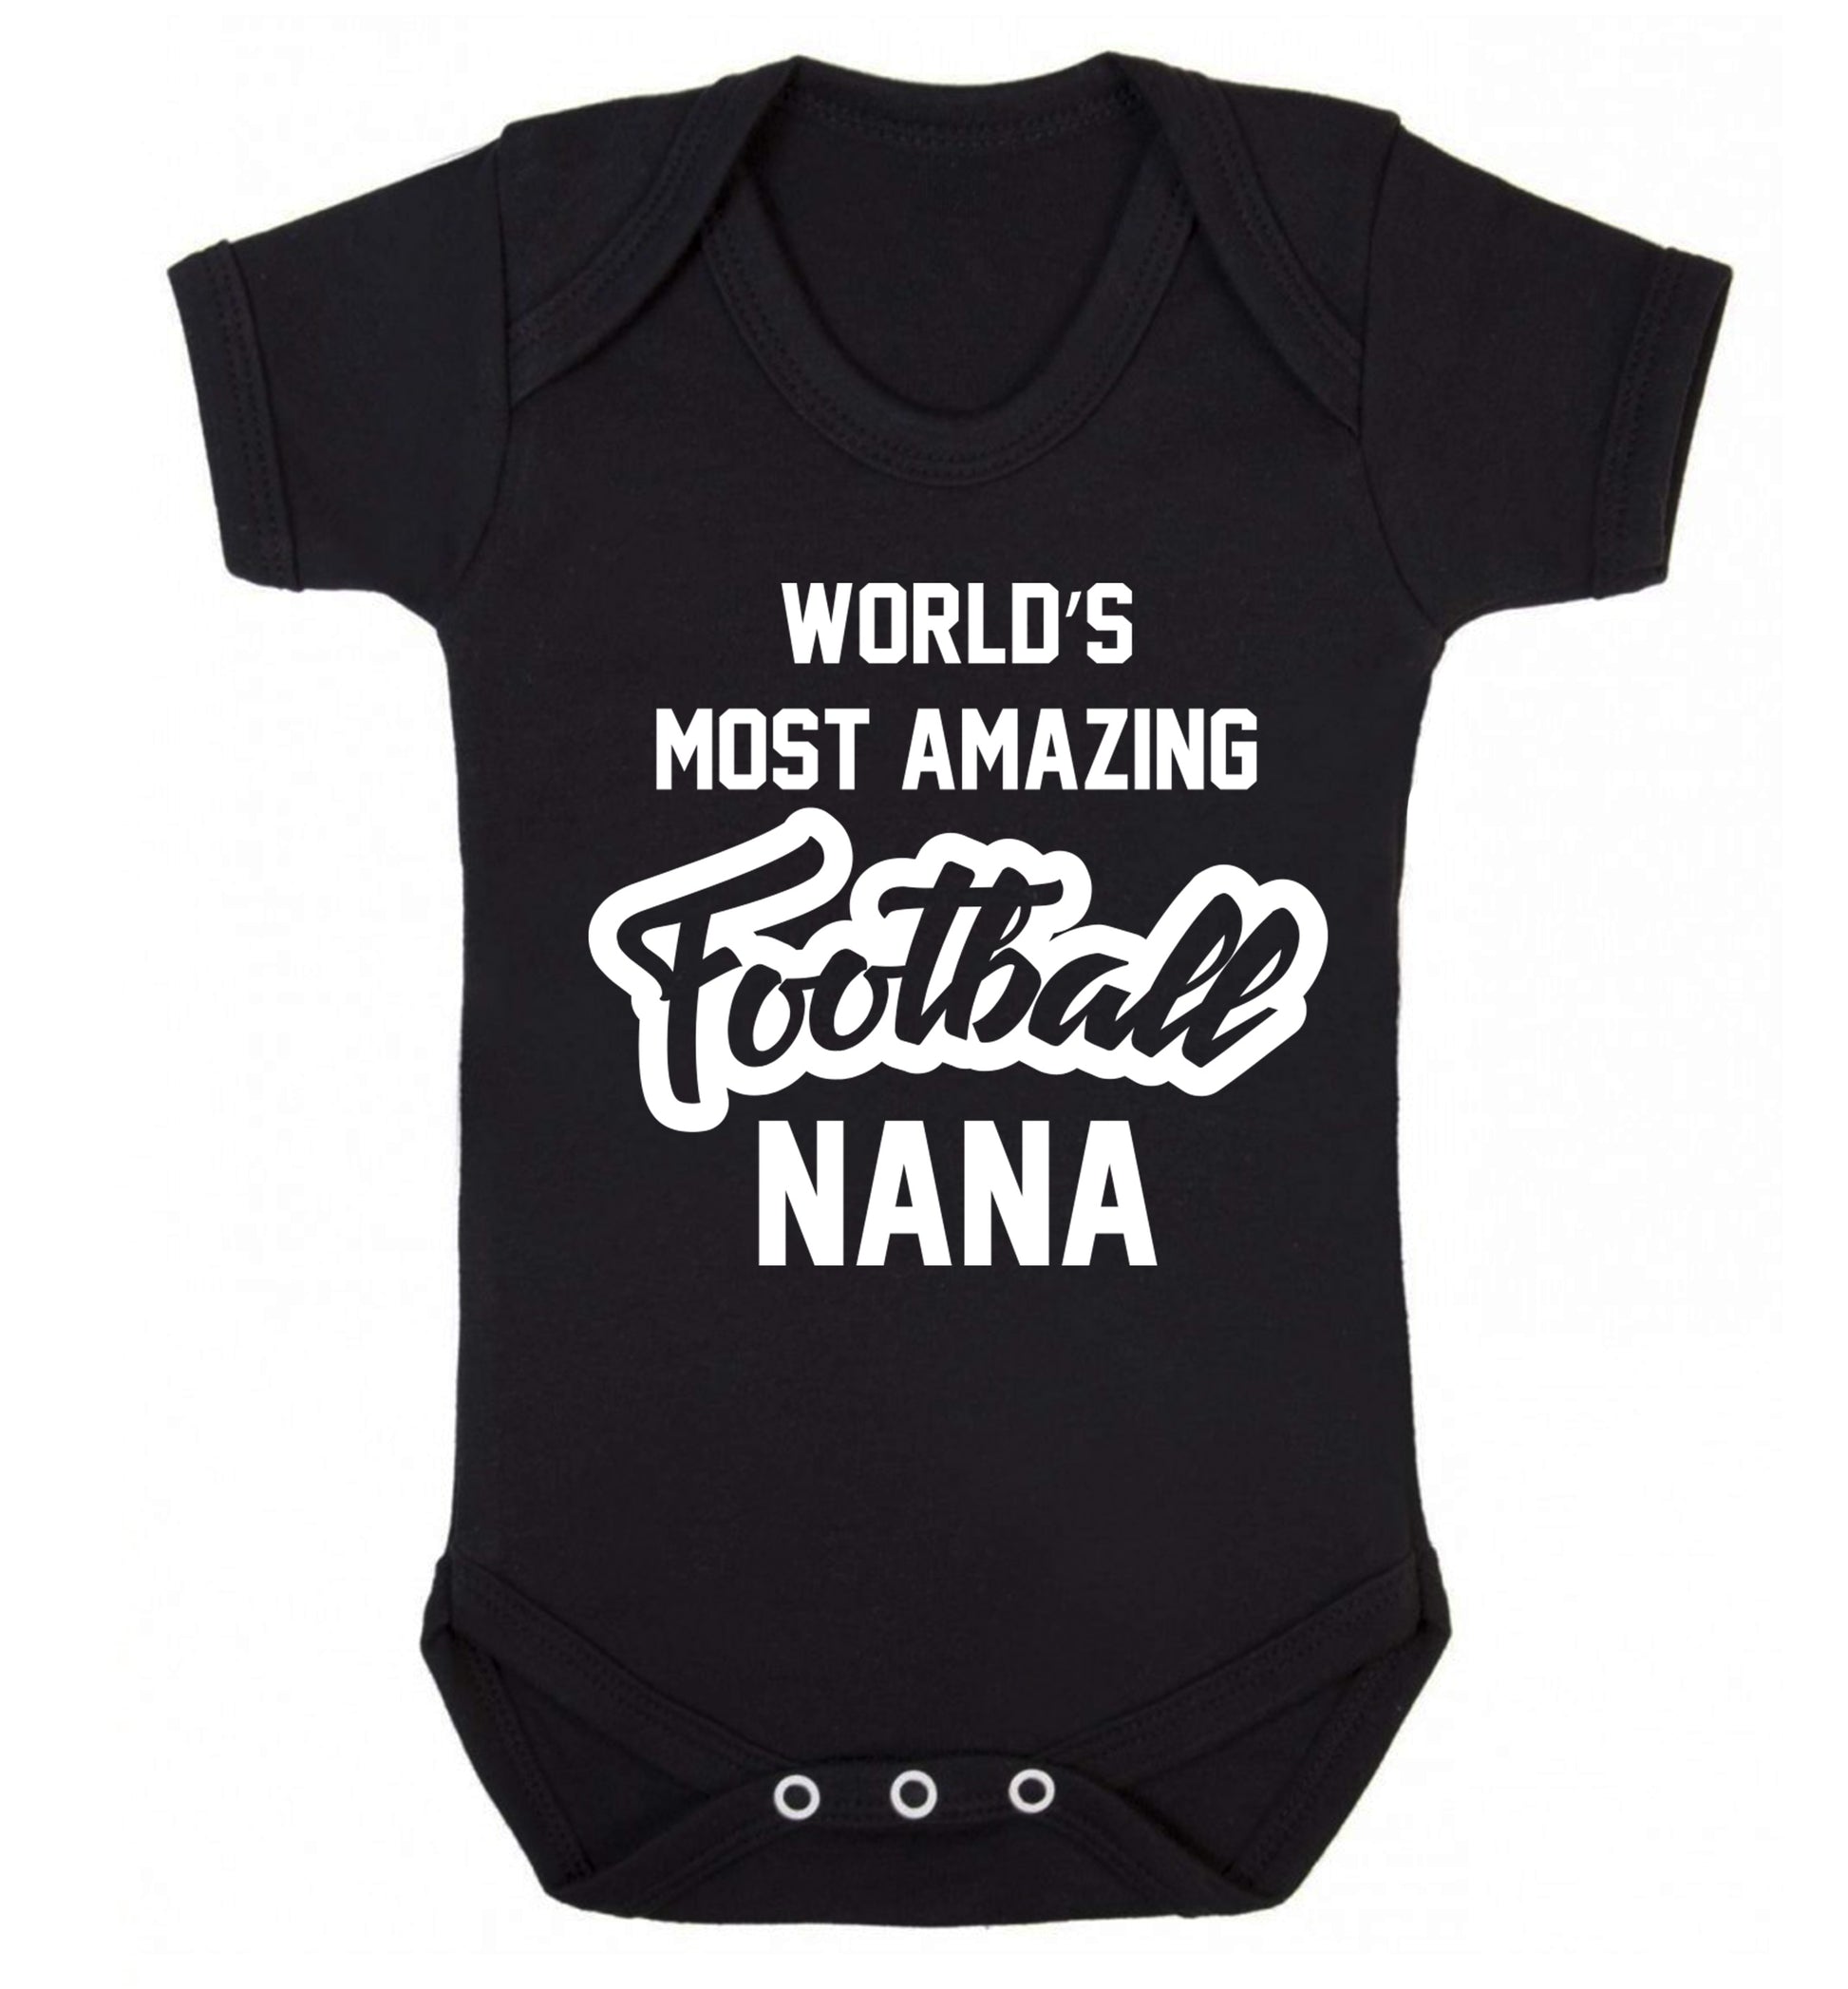 Worlds most amazing football nana Baby Vest black 18-24 months